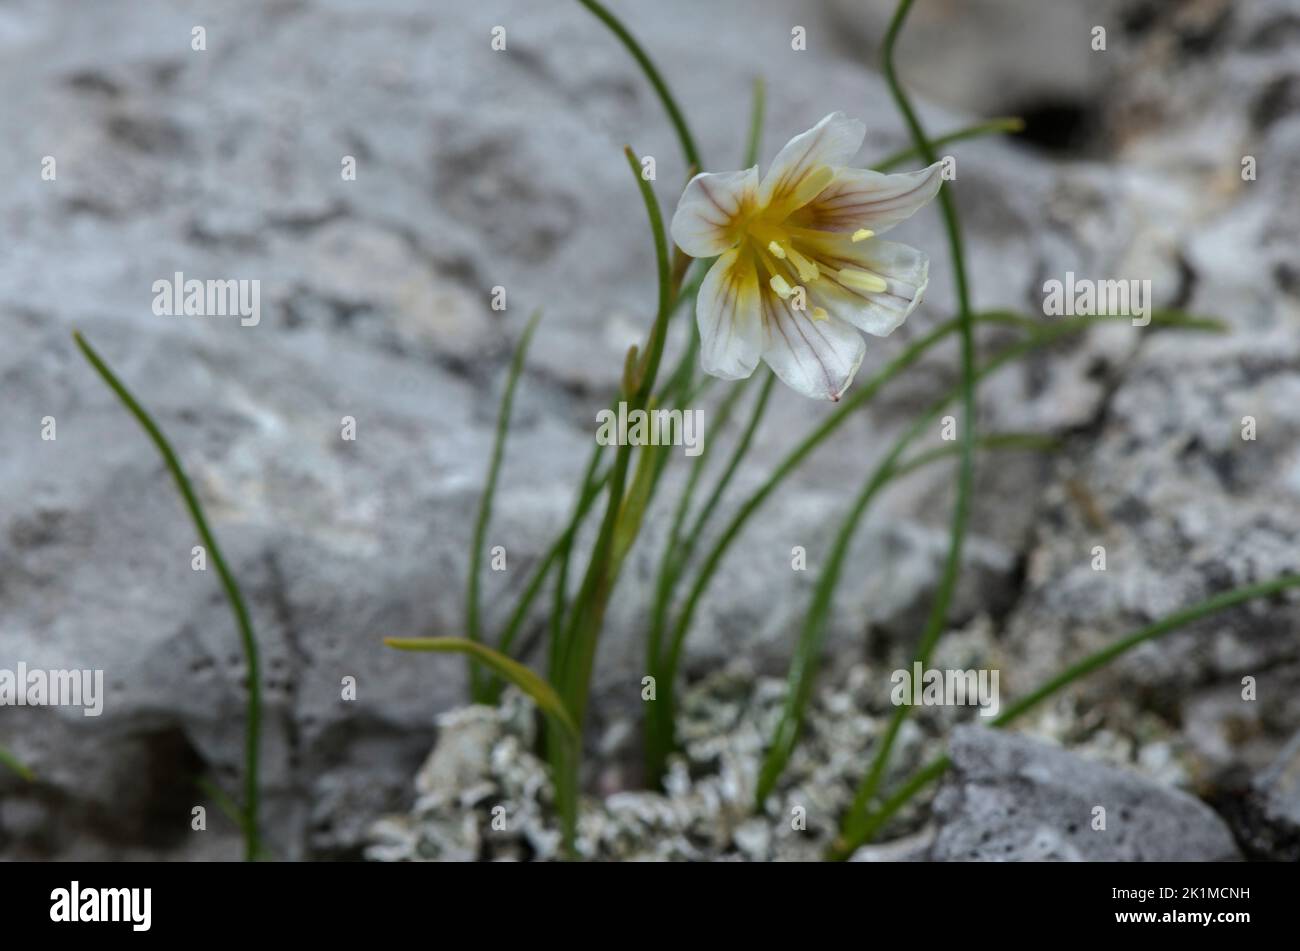 Snowdon lily, Gagea serotina, in flower. Stock Photo